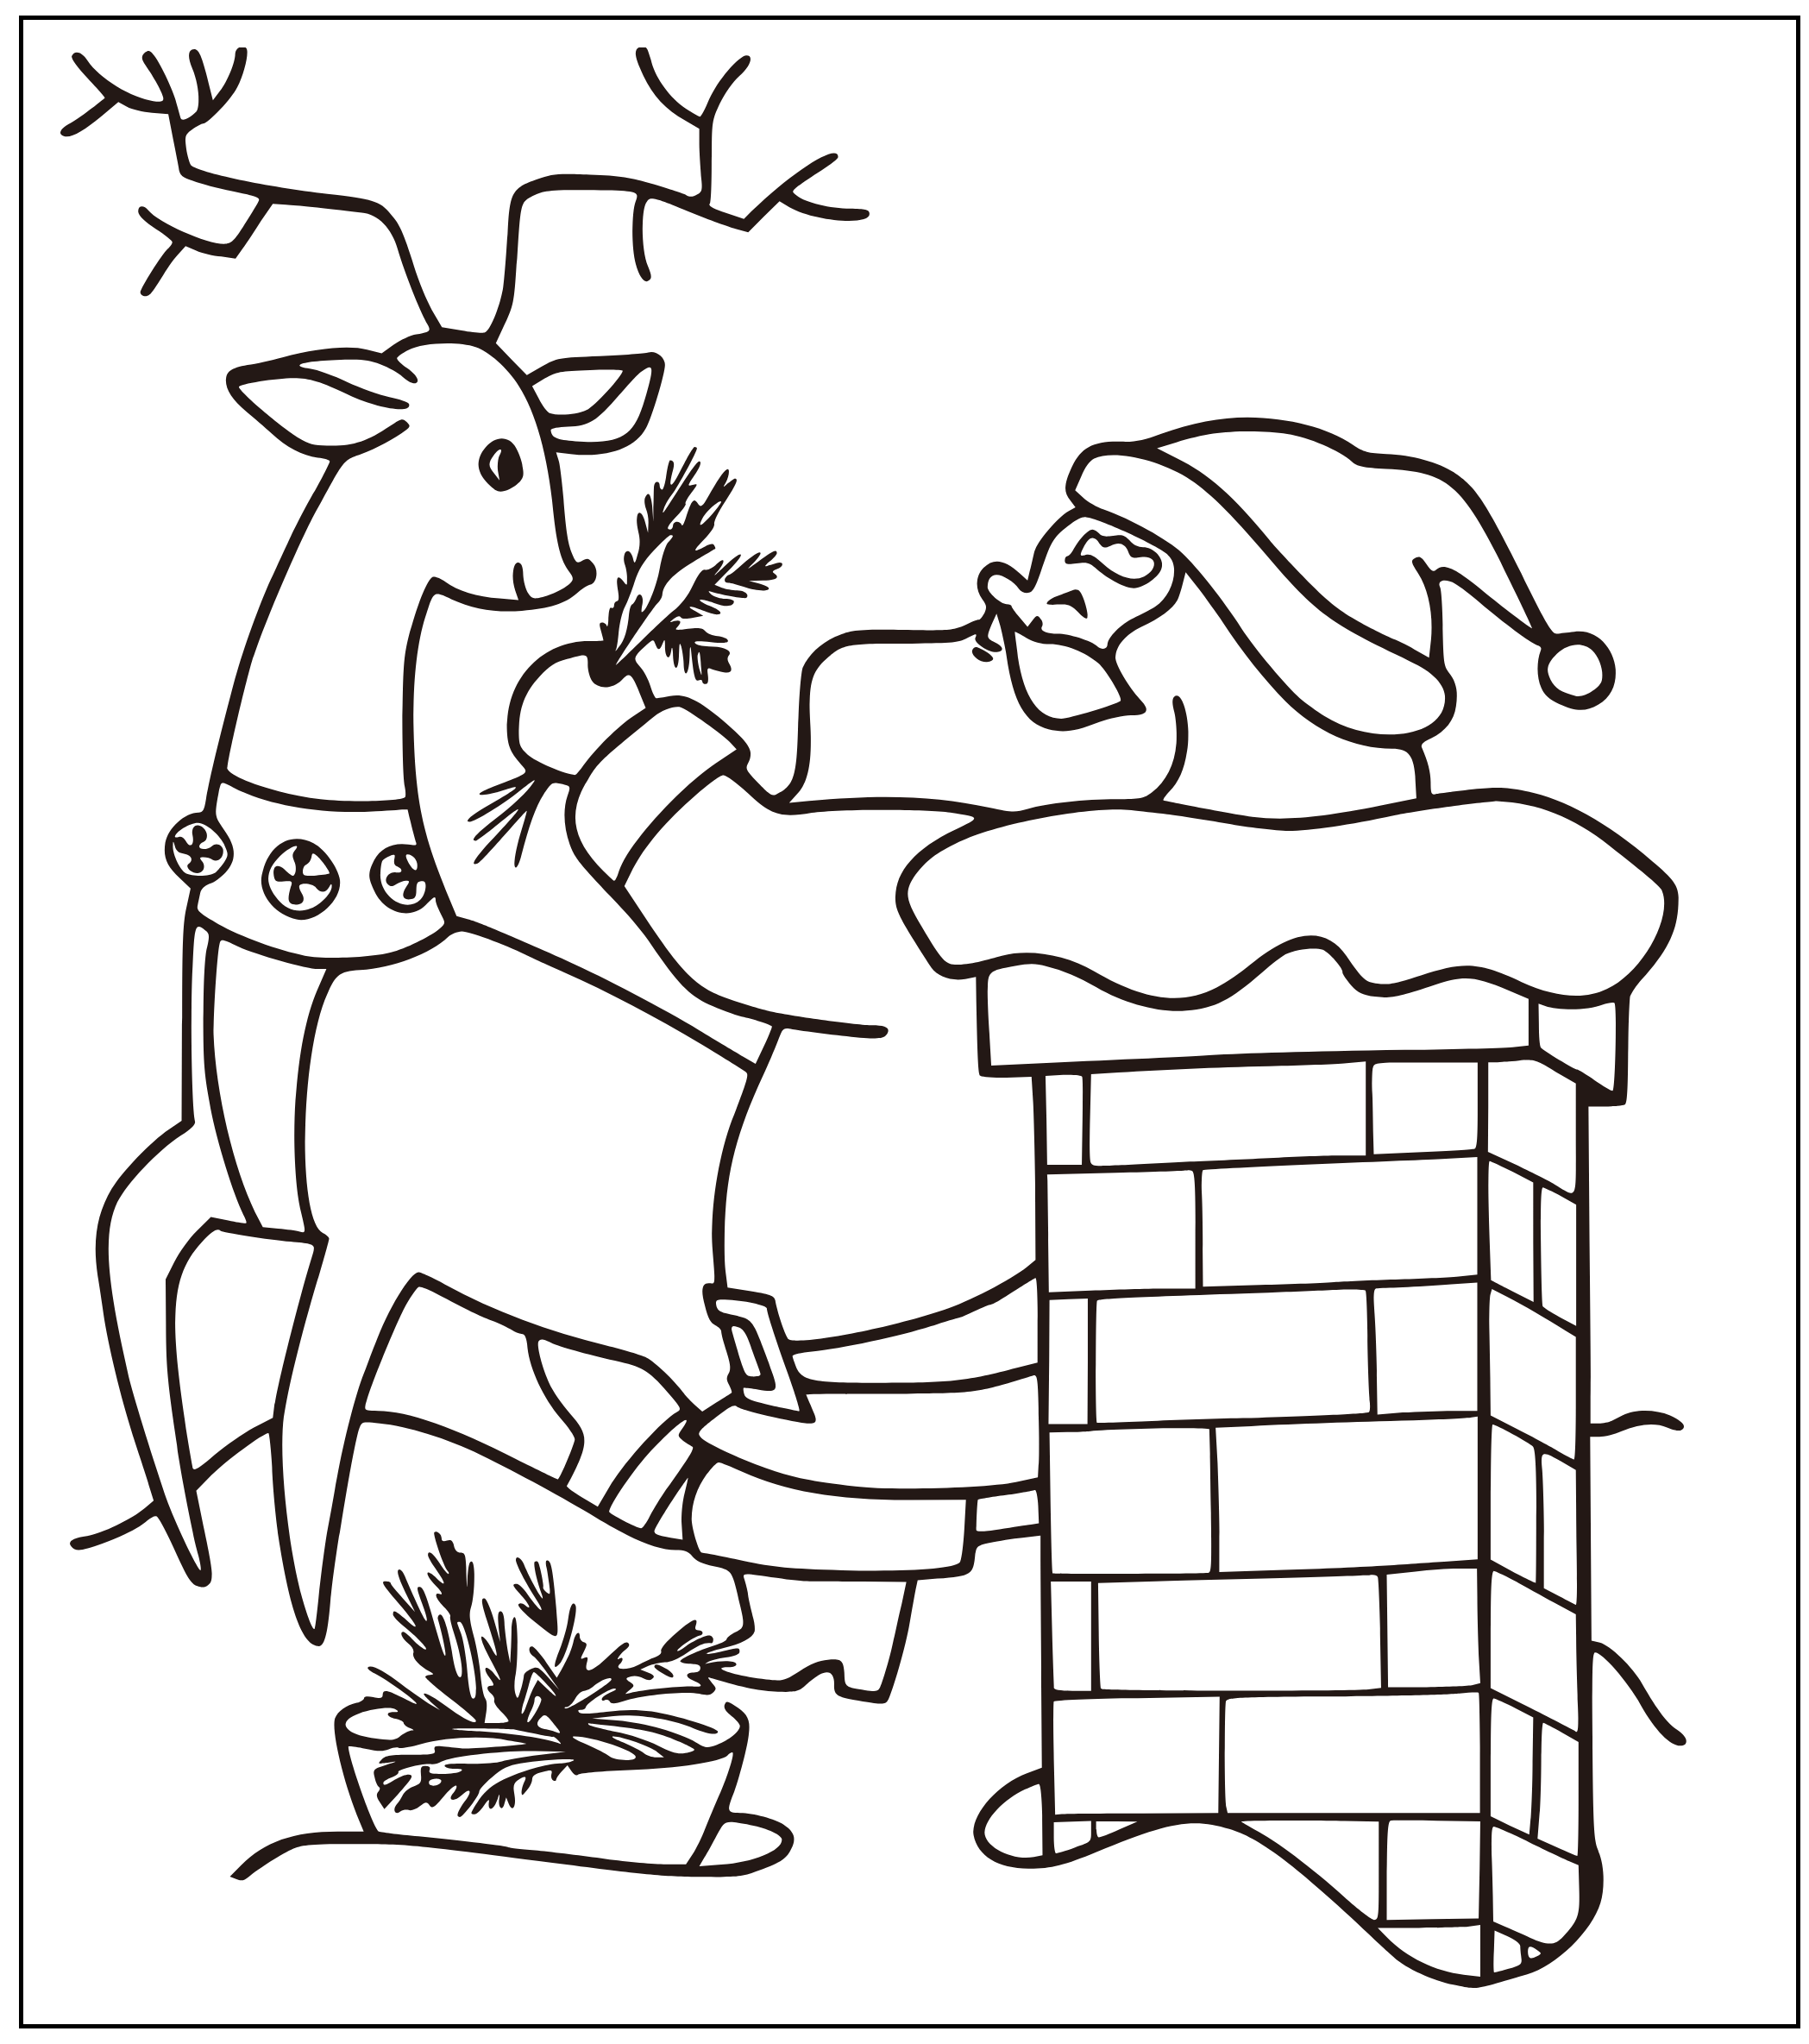 Printable Santa and reindeer  sheet Coloring Page for kids.